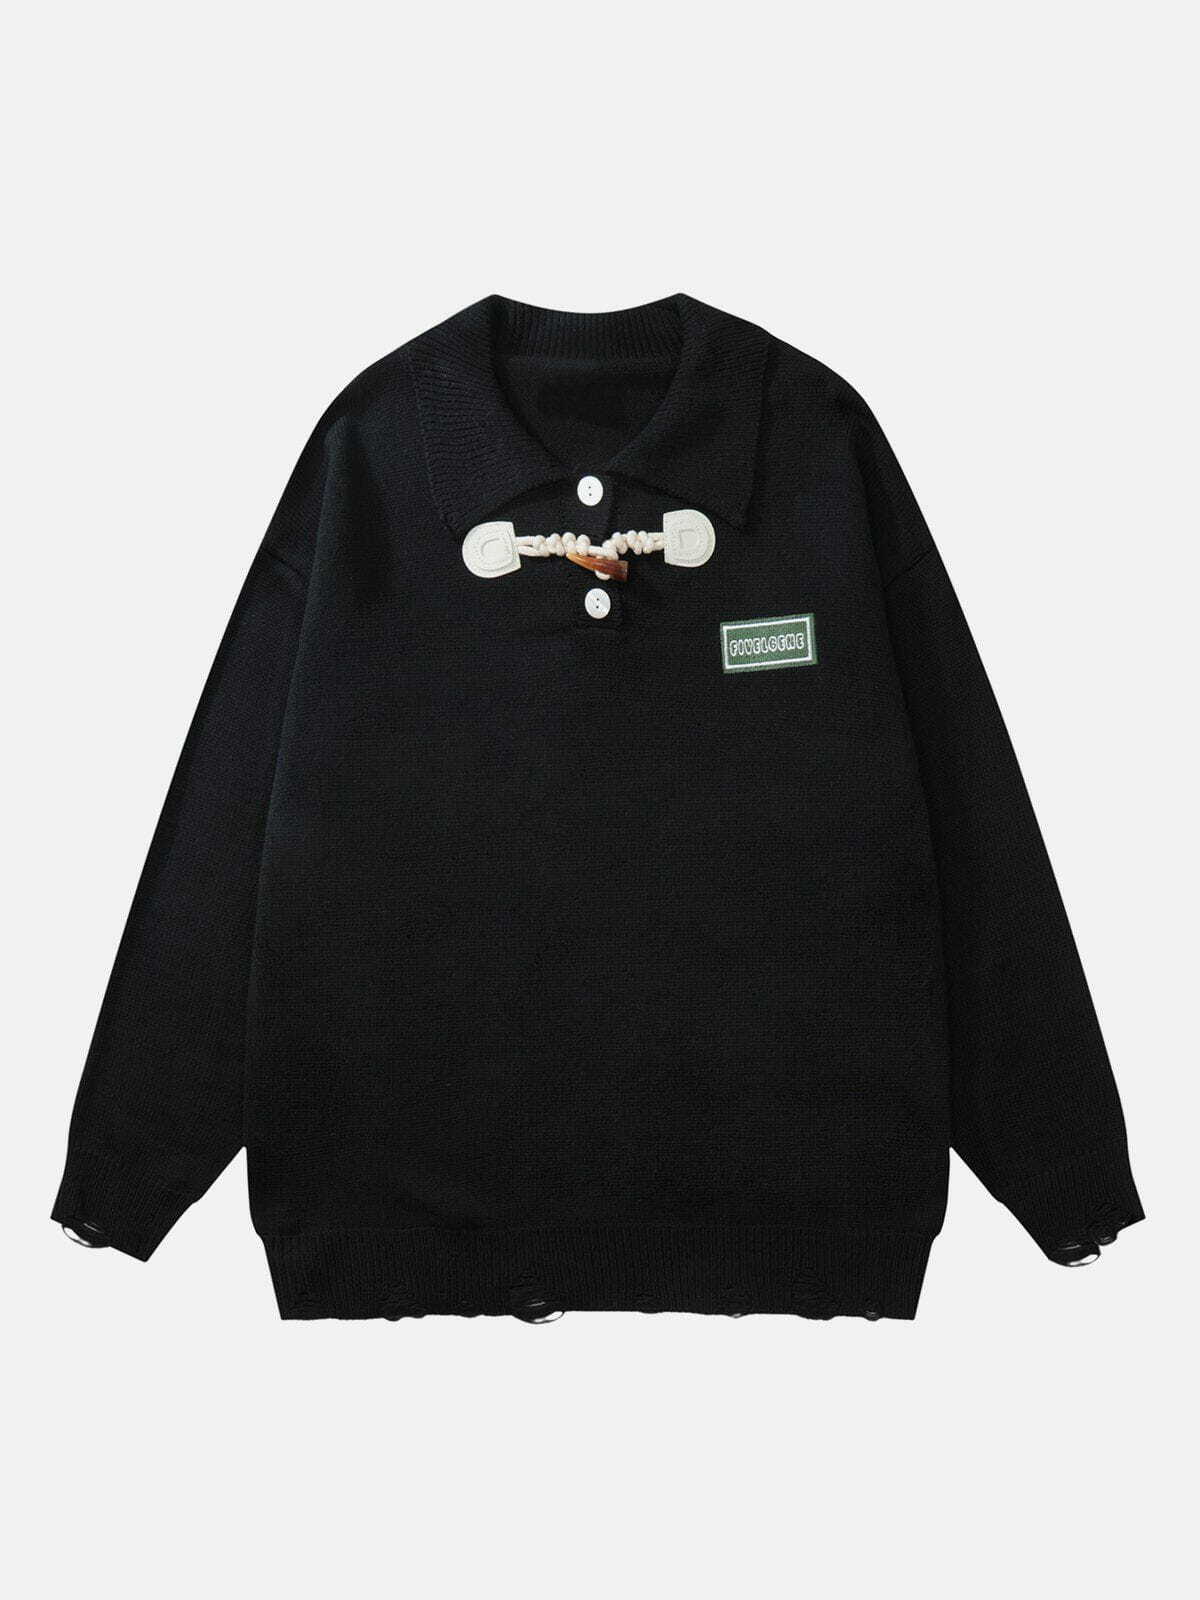 ox horn button polo sweater edgy & retro streetwear 3341